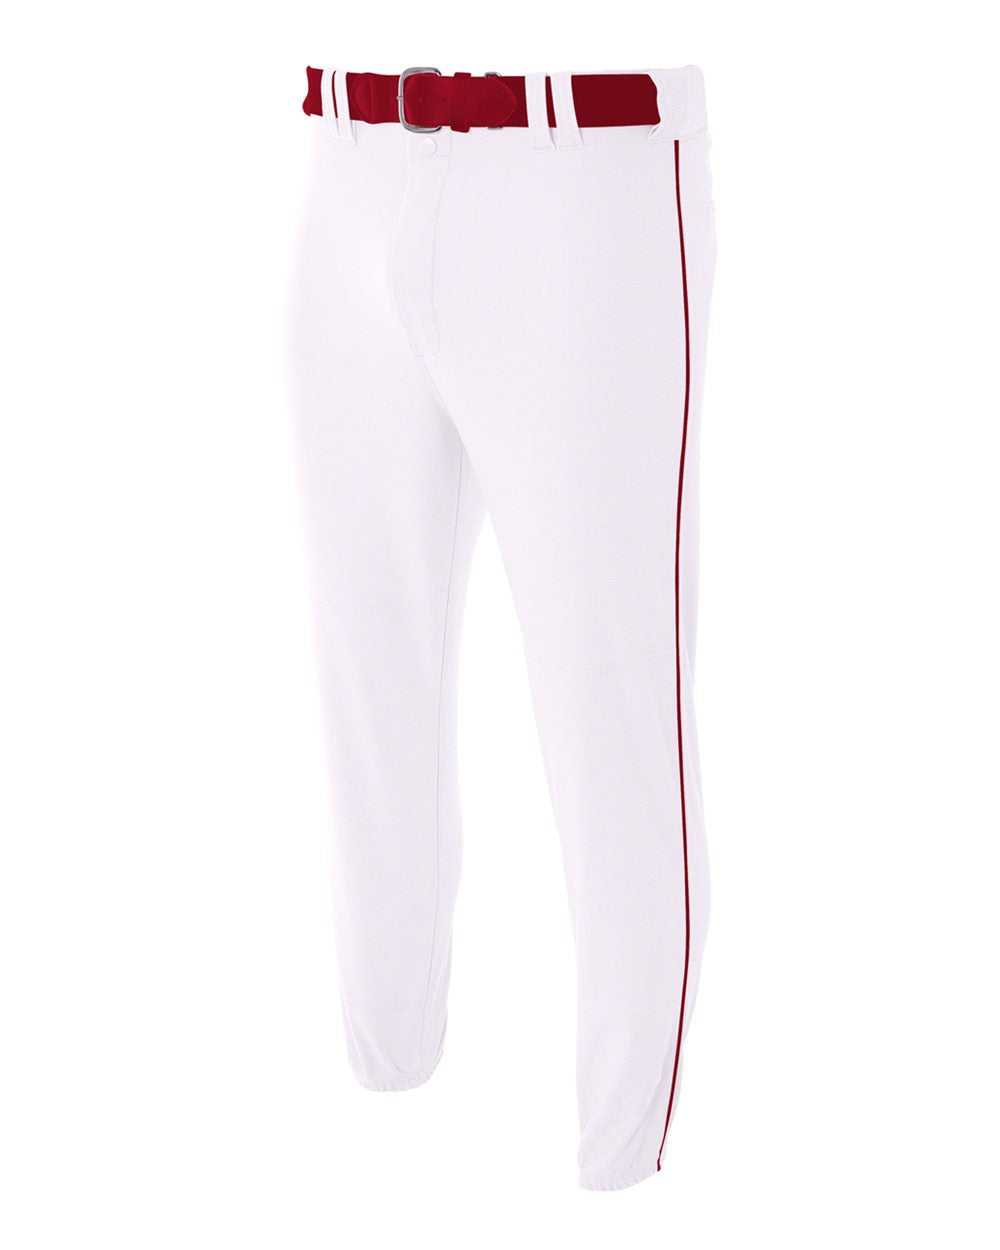 A4 N6178 Pro Style Elastic Bottom Baseball Pant - White Cardinal - HIT a Double